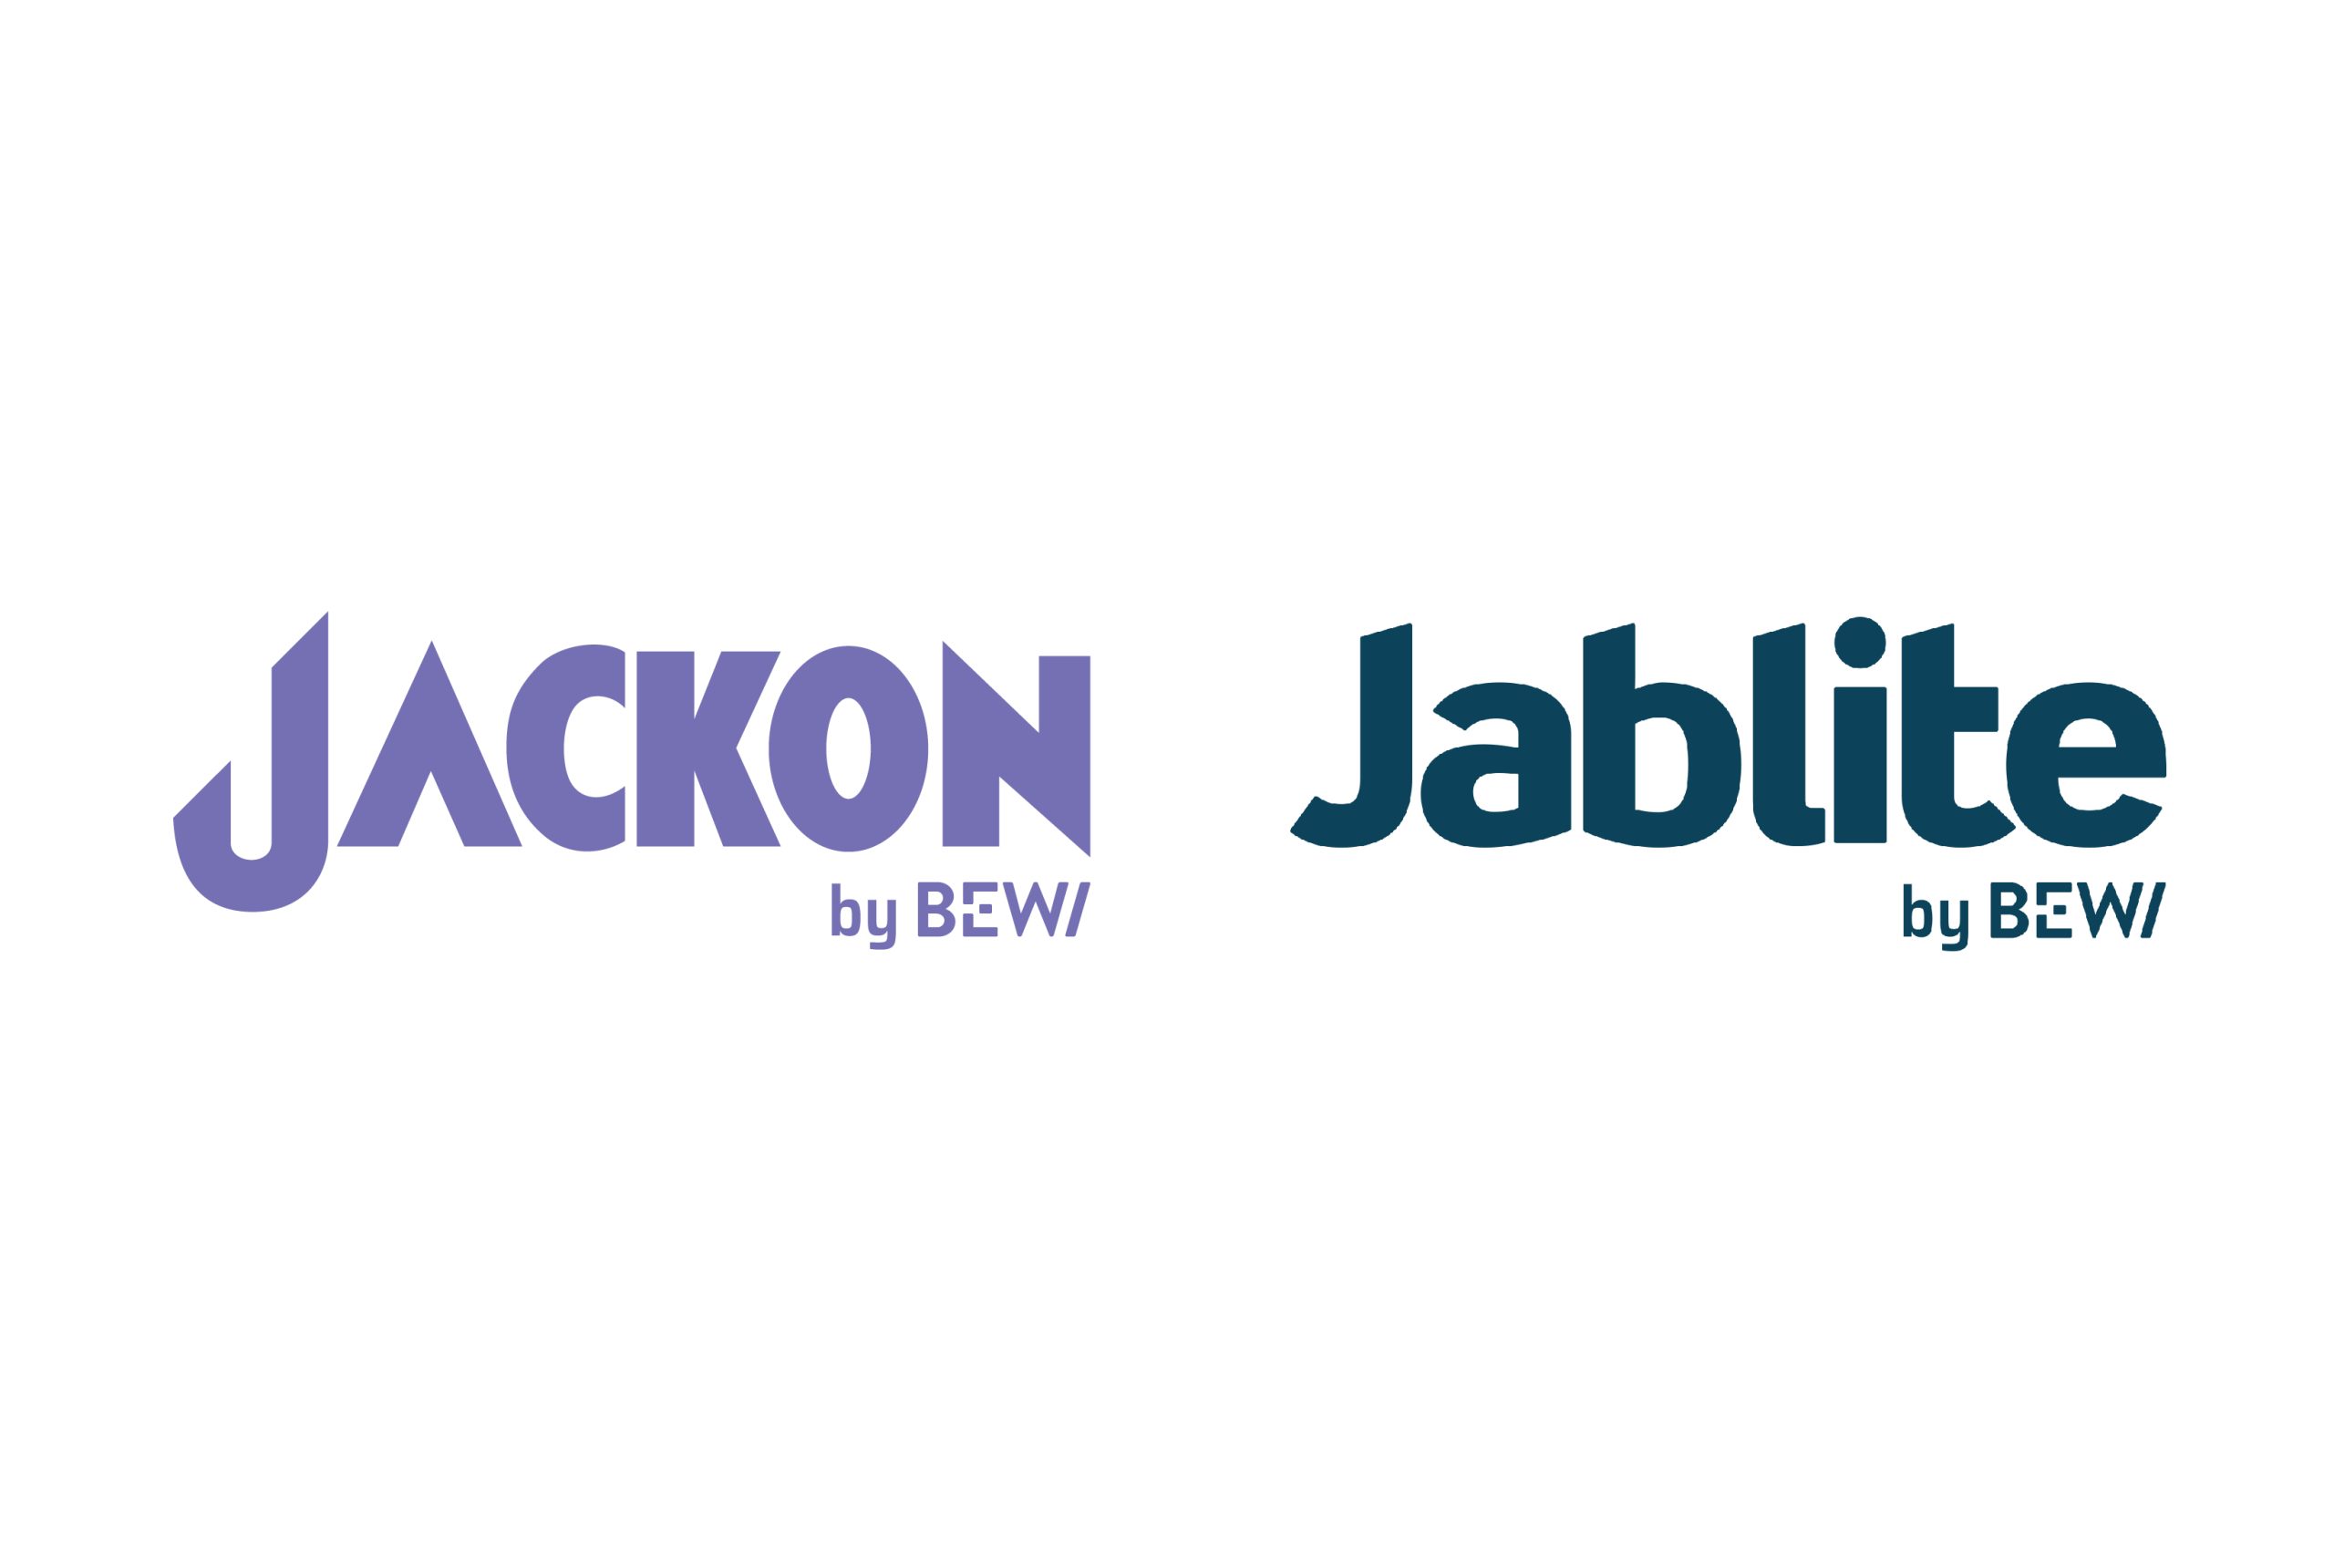 JACKON UK & JABLITE Combine After Corporate Merger of BEWI & JACKON